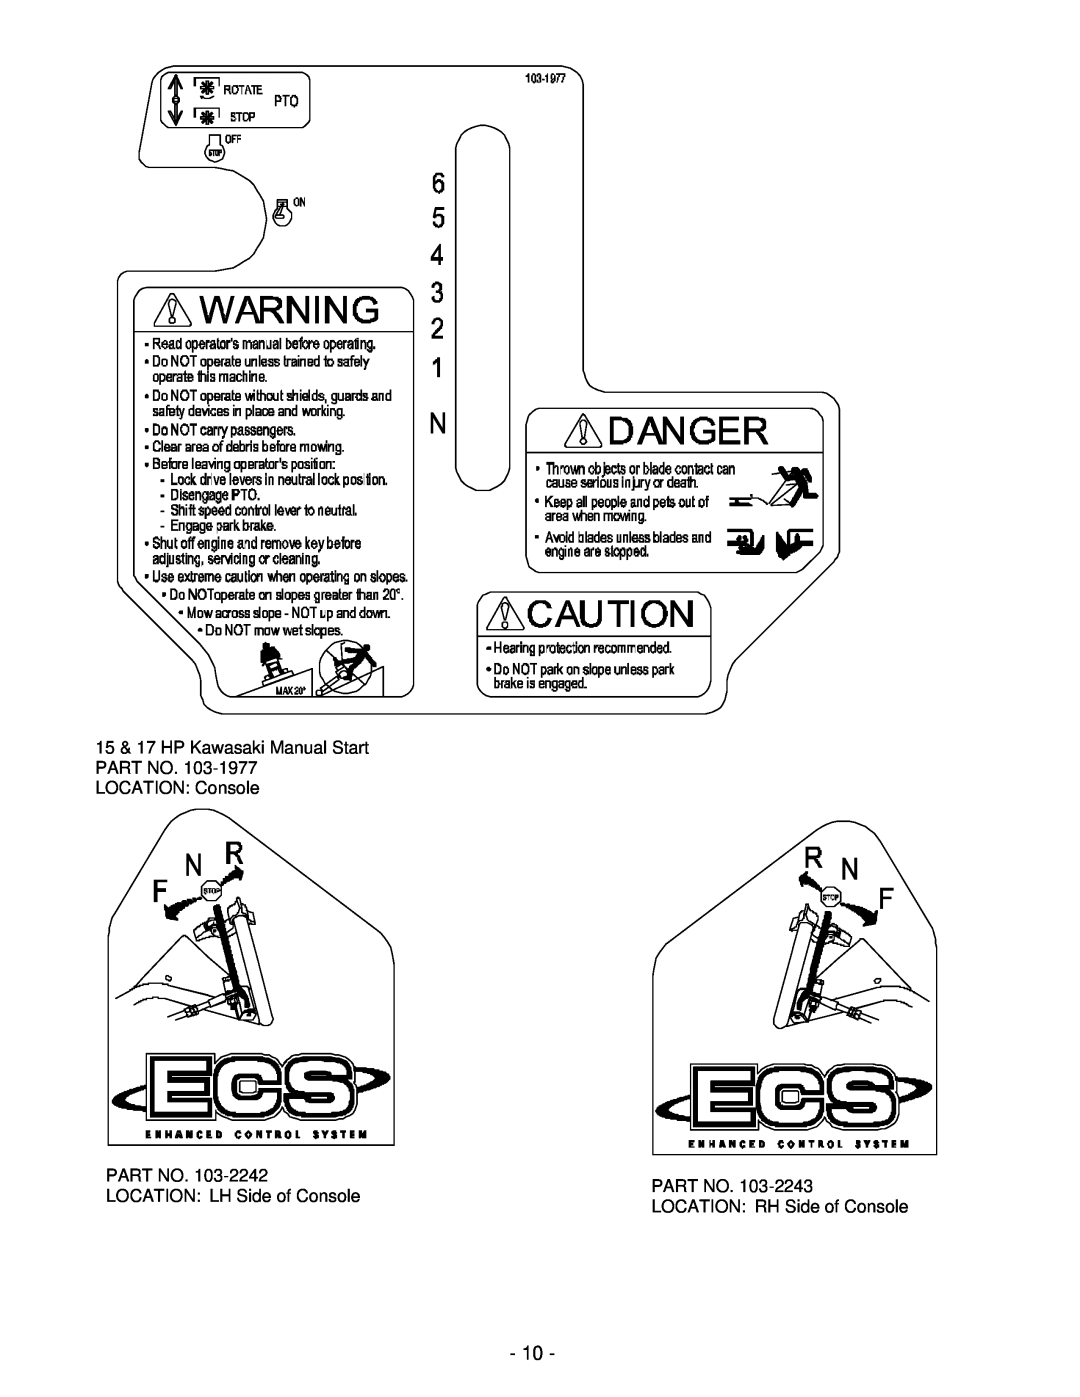 Exmark Turf Tracer HP manual 15 & 17 HP Kawasaki Manual Start, LOCATION Console 